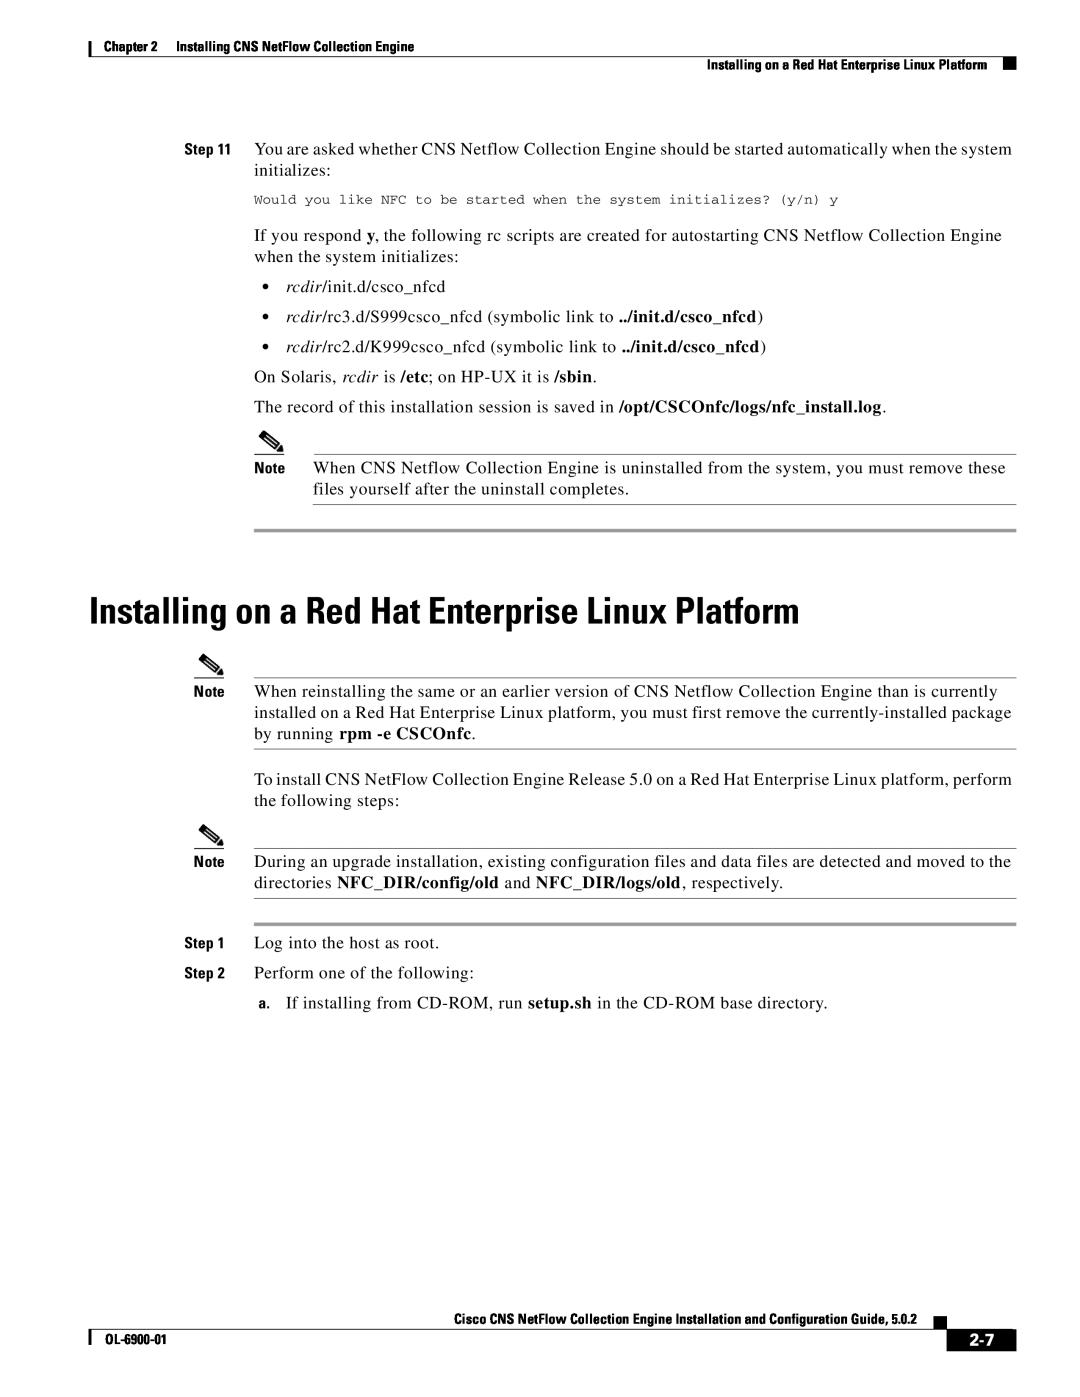 Cisco Systems OL-6900-01 manual Installing on a Red Hat Enterprise Linux Platform 